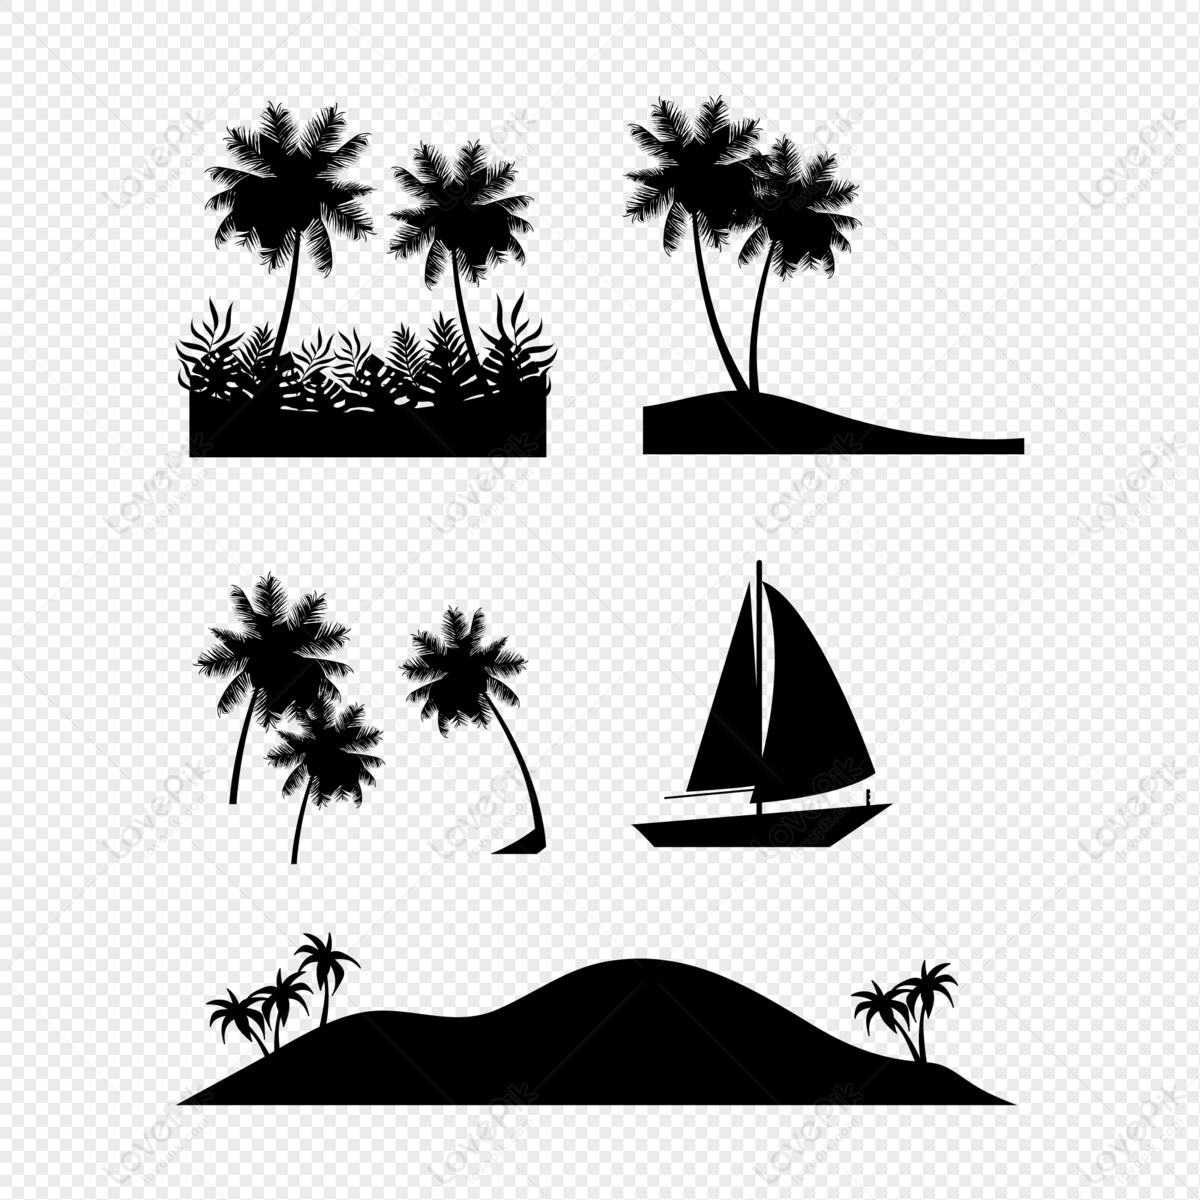 Coconut tree silhouette vector, tree, vector silhouette, coconut tree vector png hd transparent image